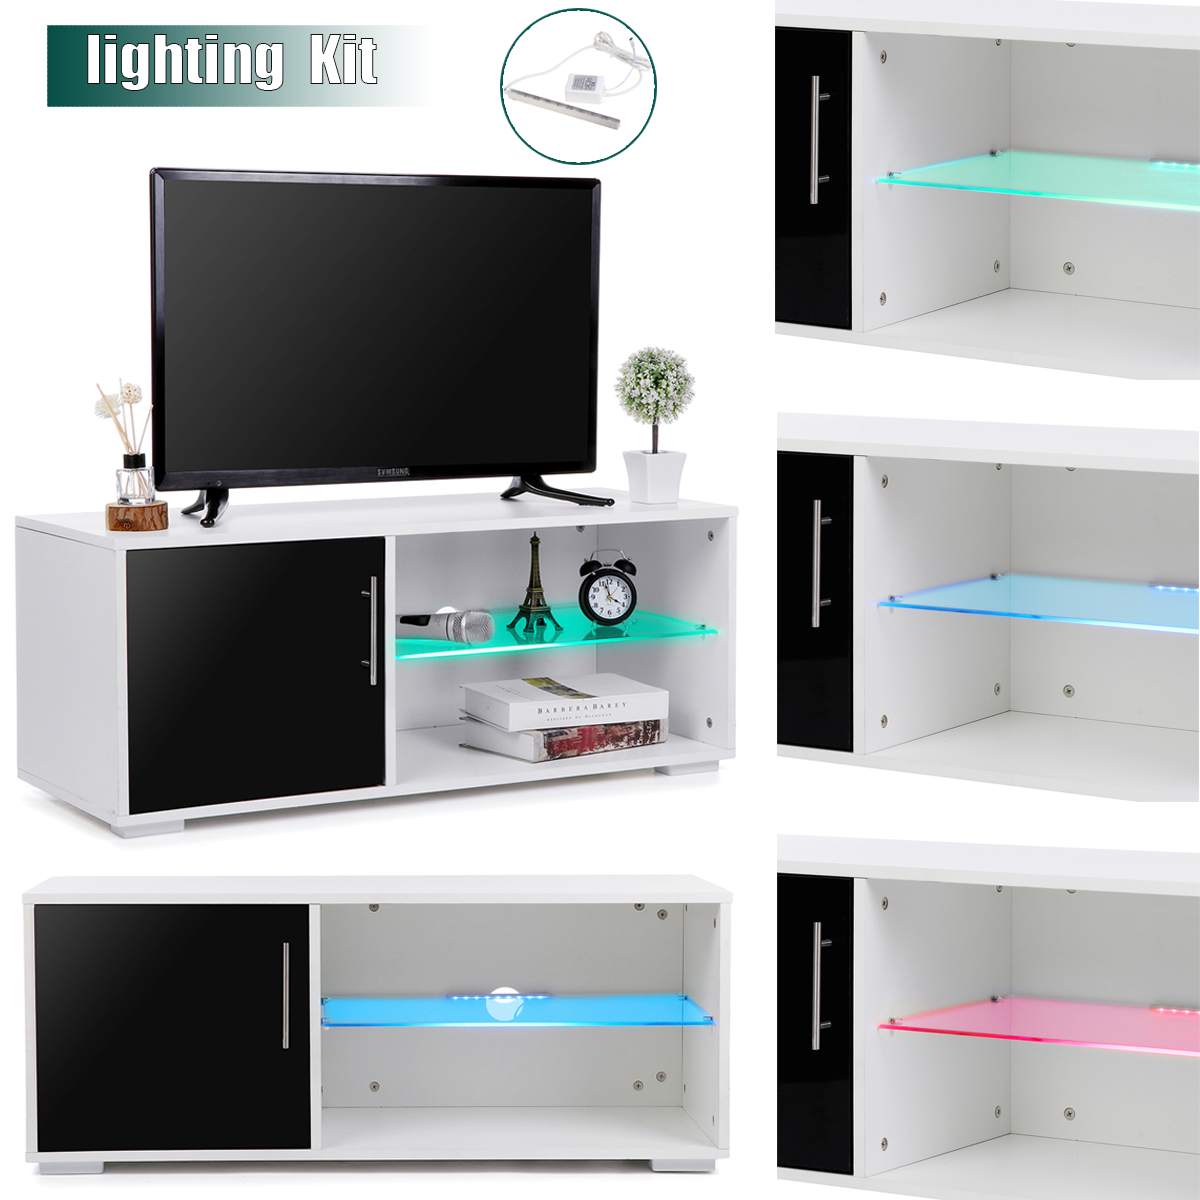 39'' Rectangular TV Cabinet Modern LED TV Stands Living Room Furniture Detachable TV Unit Bracket with Drawers Home Furnishings